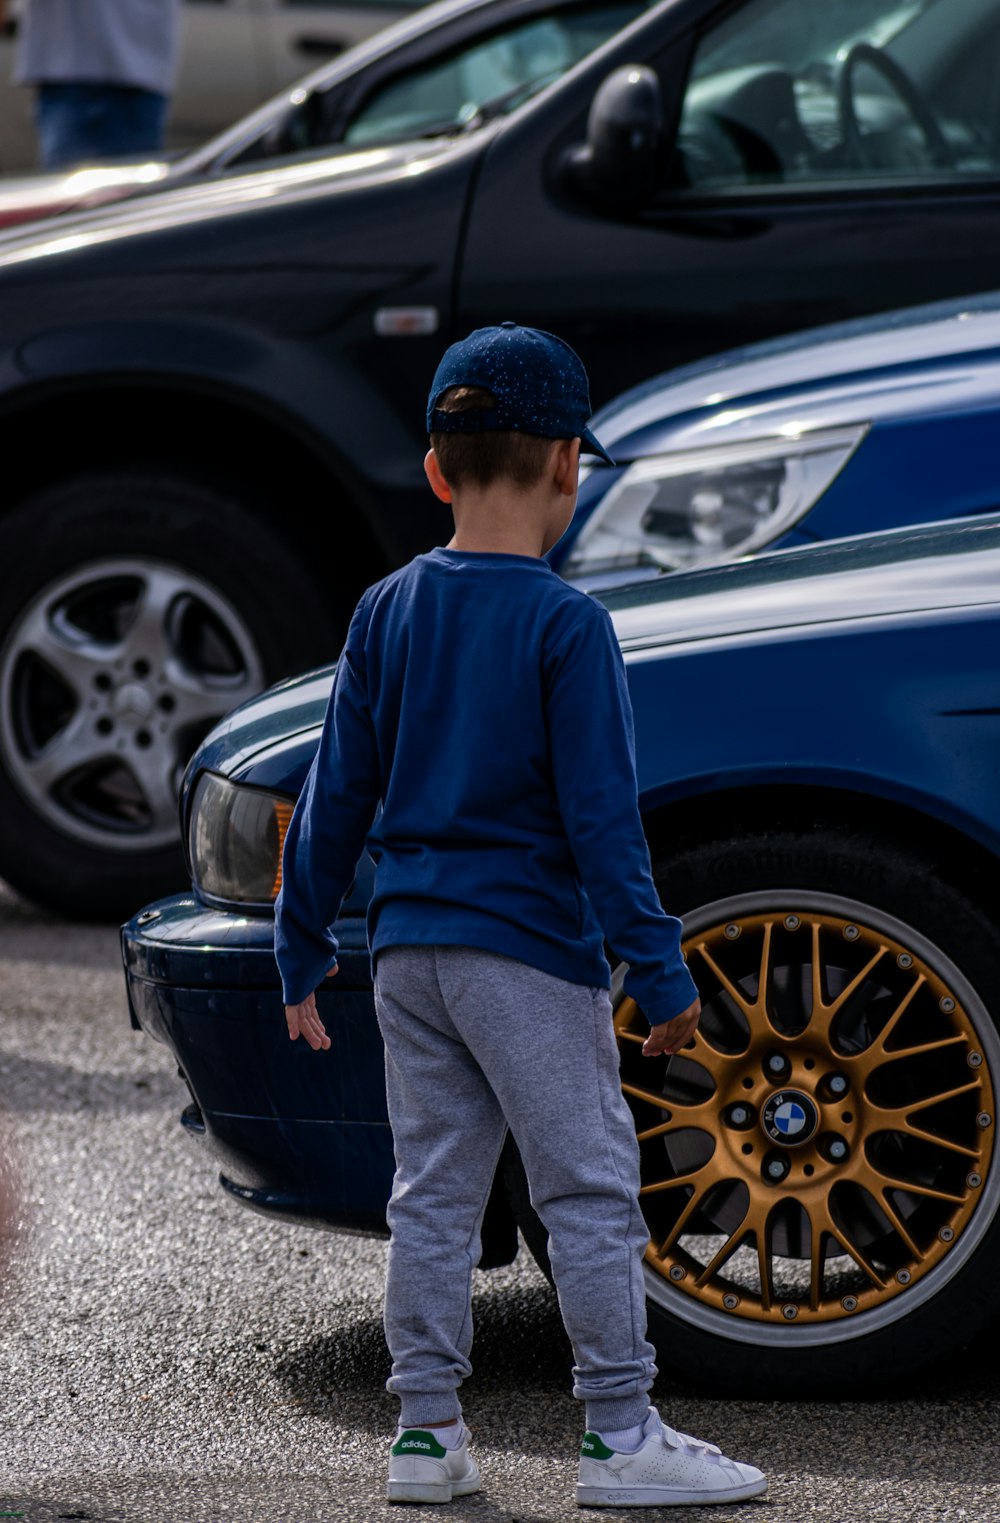 Un niño parado junto a un coche